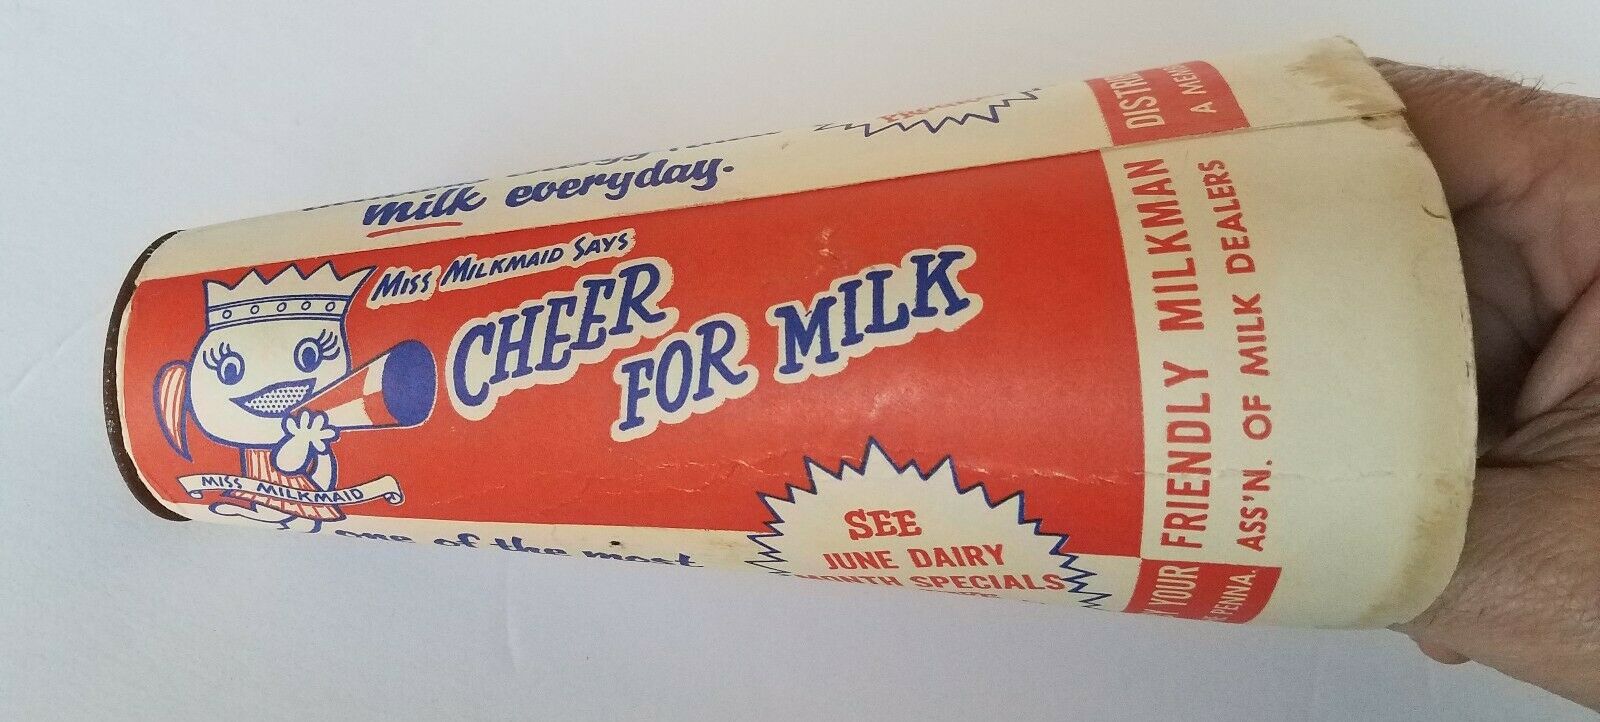 Vintage Paper Cone Megaphone Miss Milkmaid -  Cheer For Milk  Milk Adv 1950s Pa.